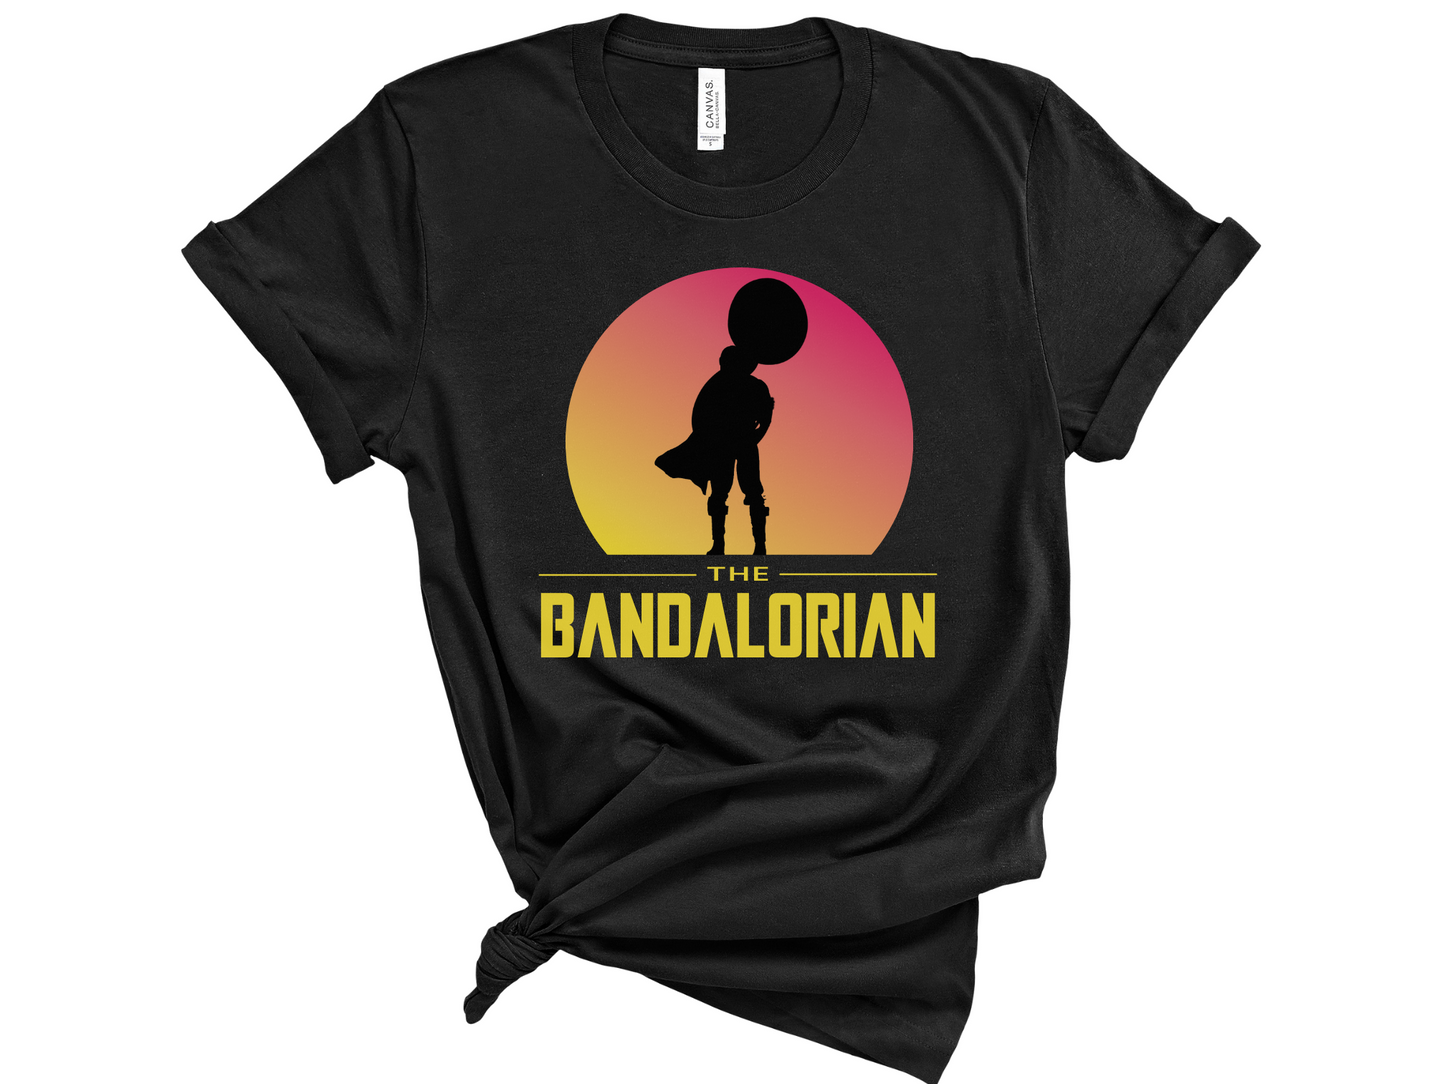 The Bandalorian Unisex T-Shirt: All Band Instruments